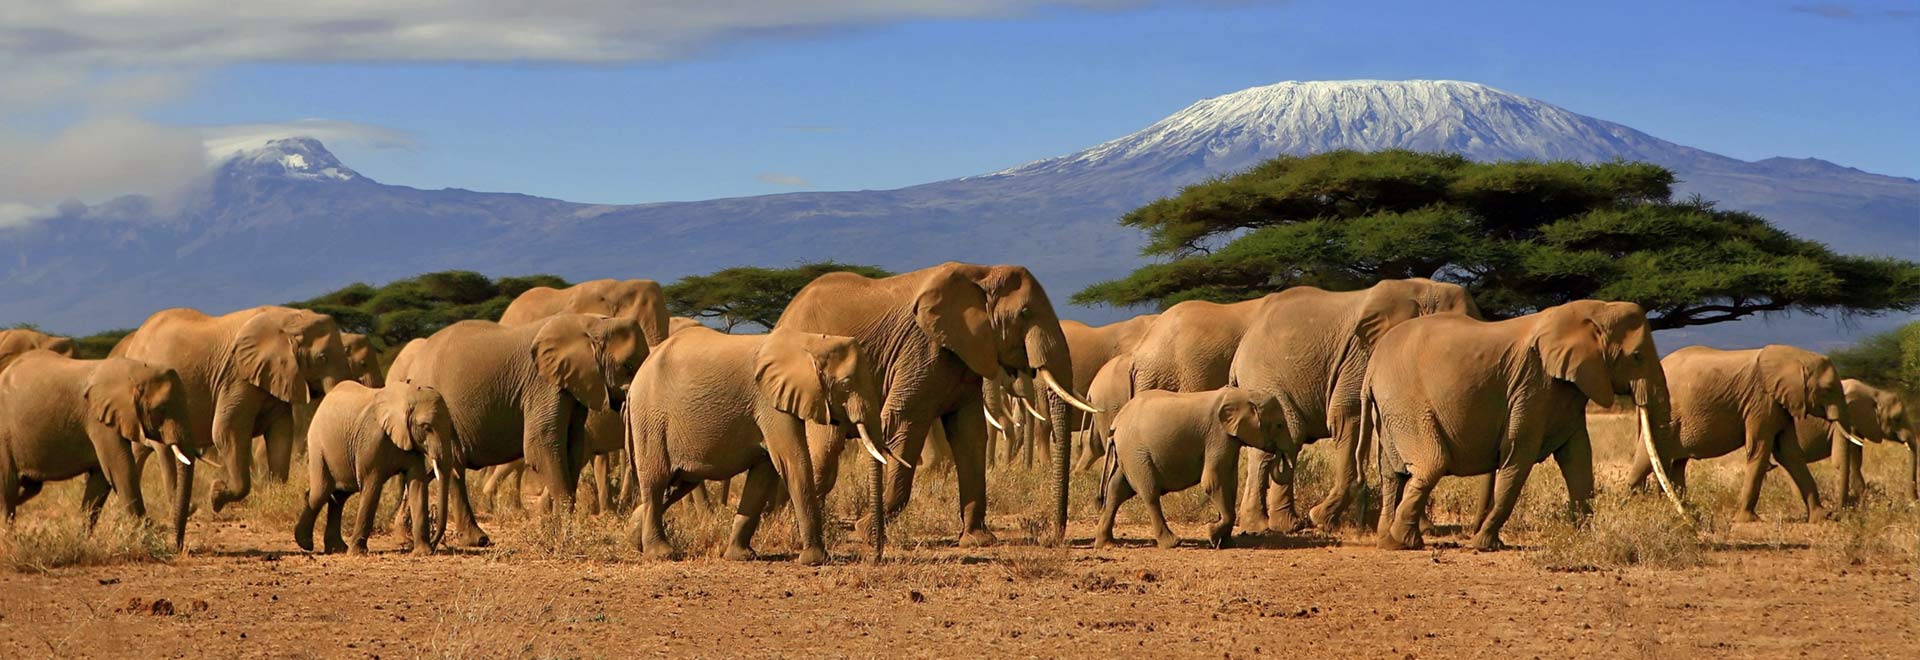 Kenya & Tanzania Wildlife Safari | Abercrombie & Kent